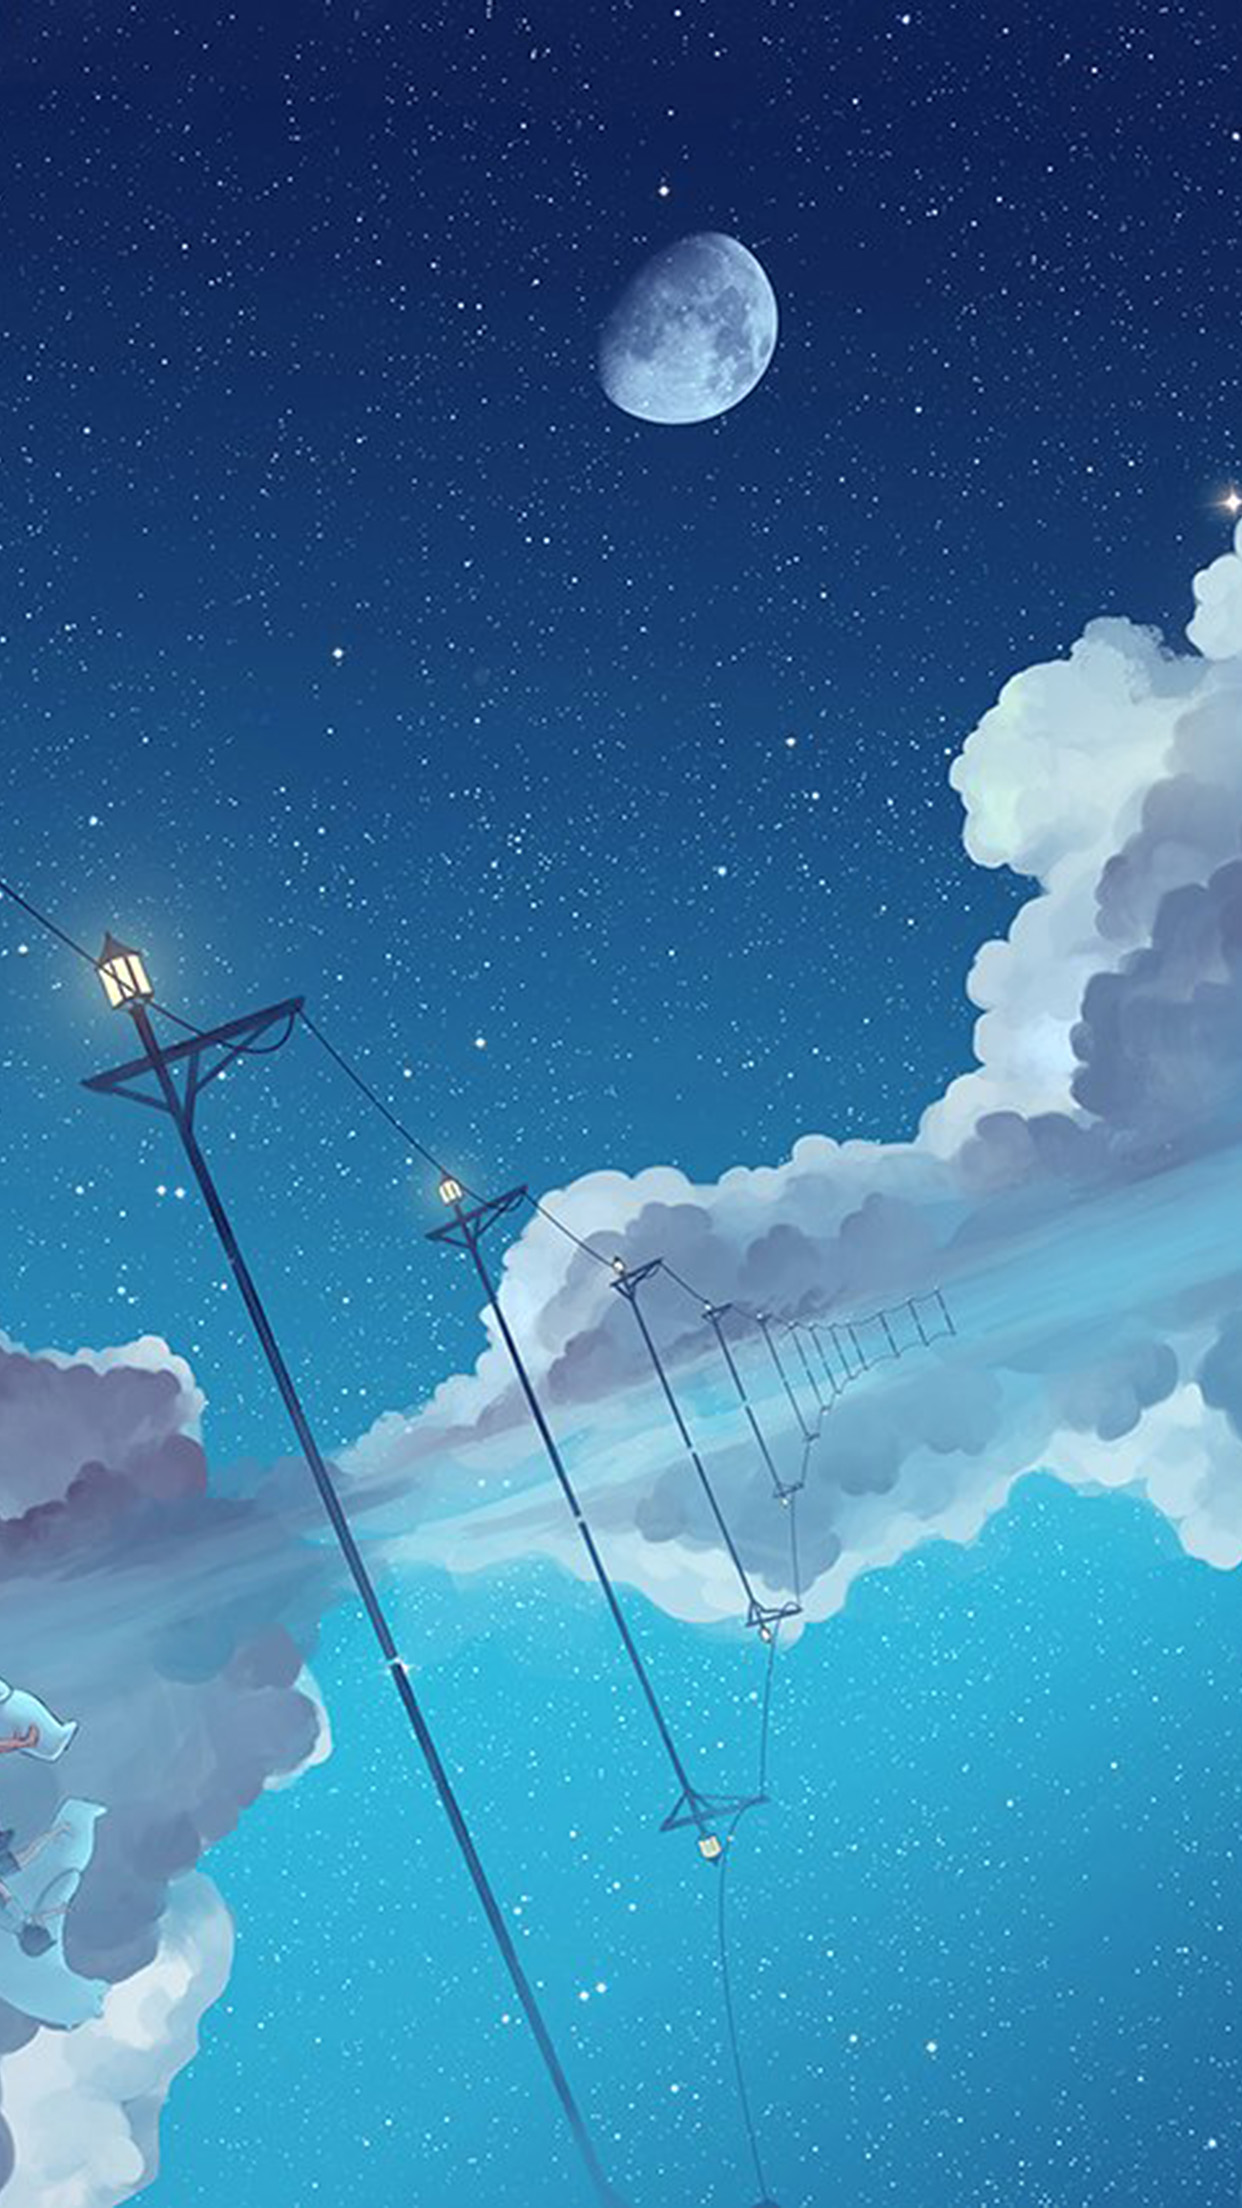 iPhone X wallpaper. illust star moon sky night art